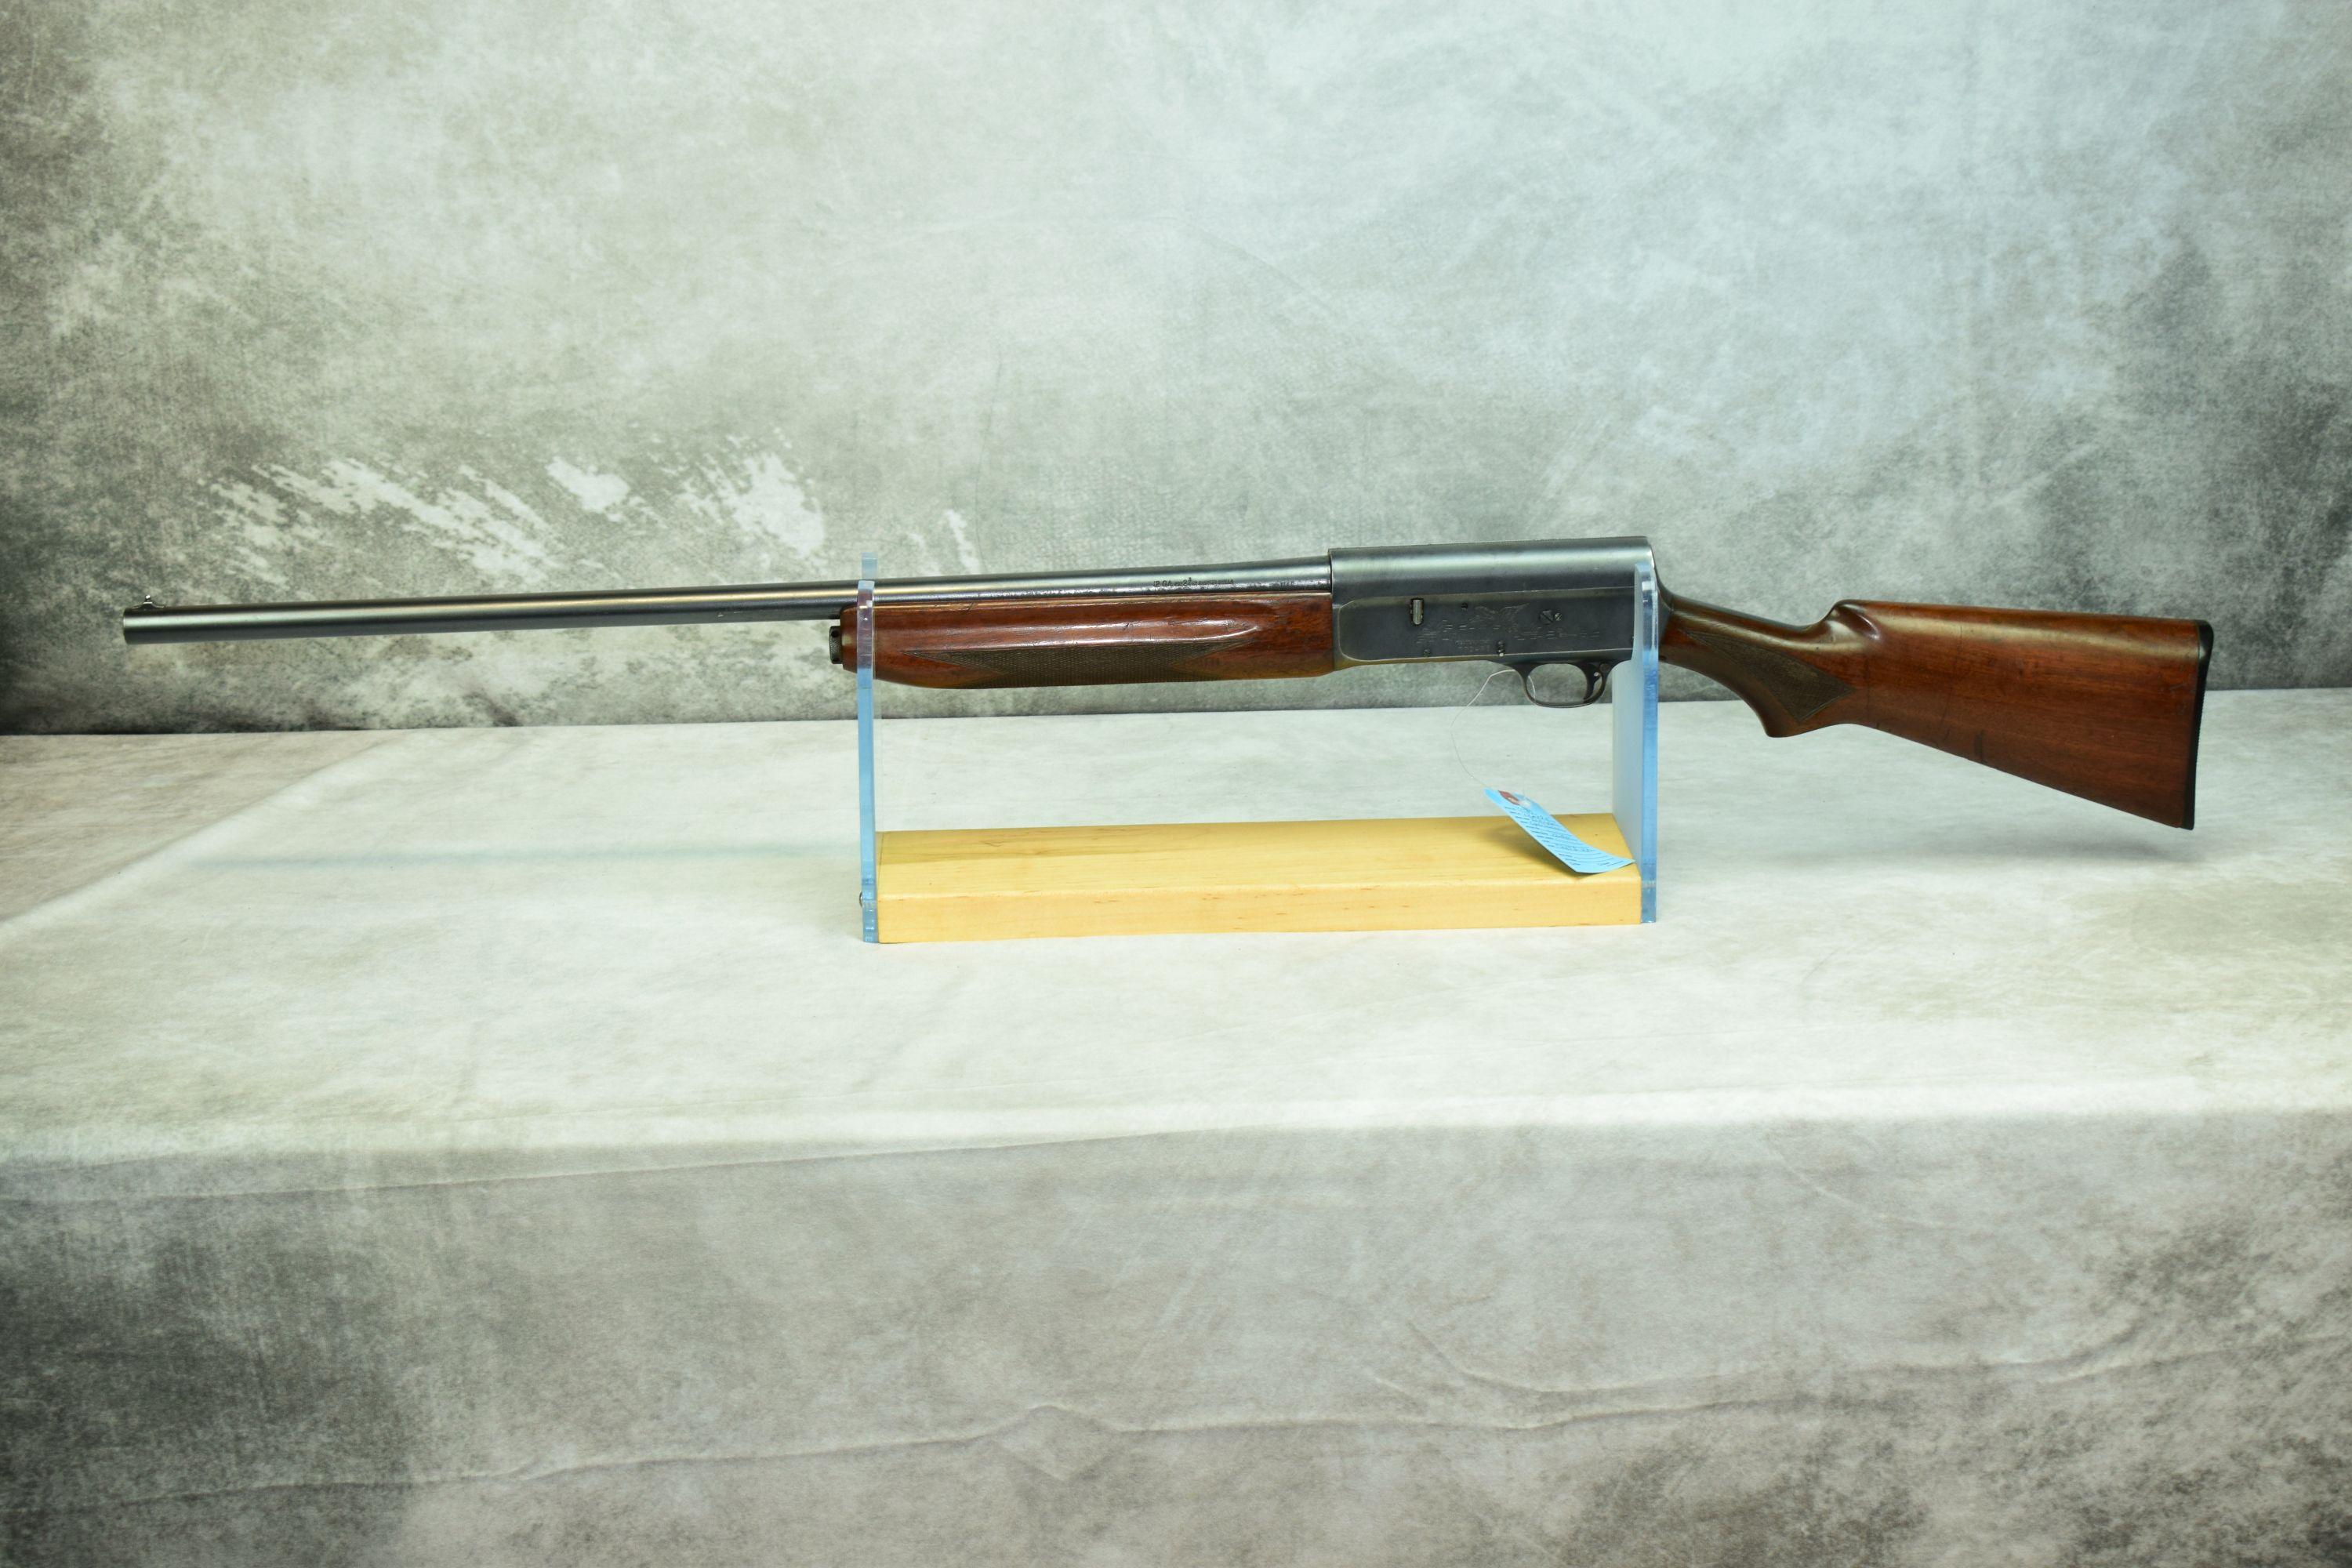 Remington  Mod 11  12 GA  2-3/4